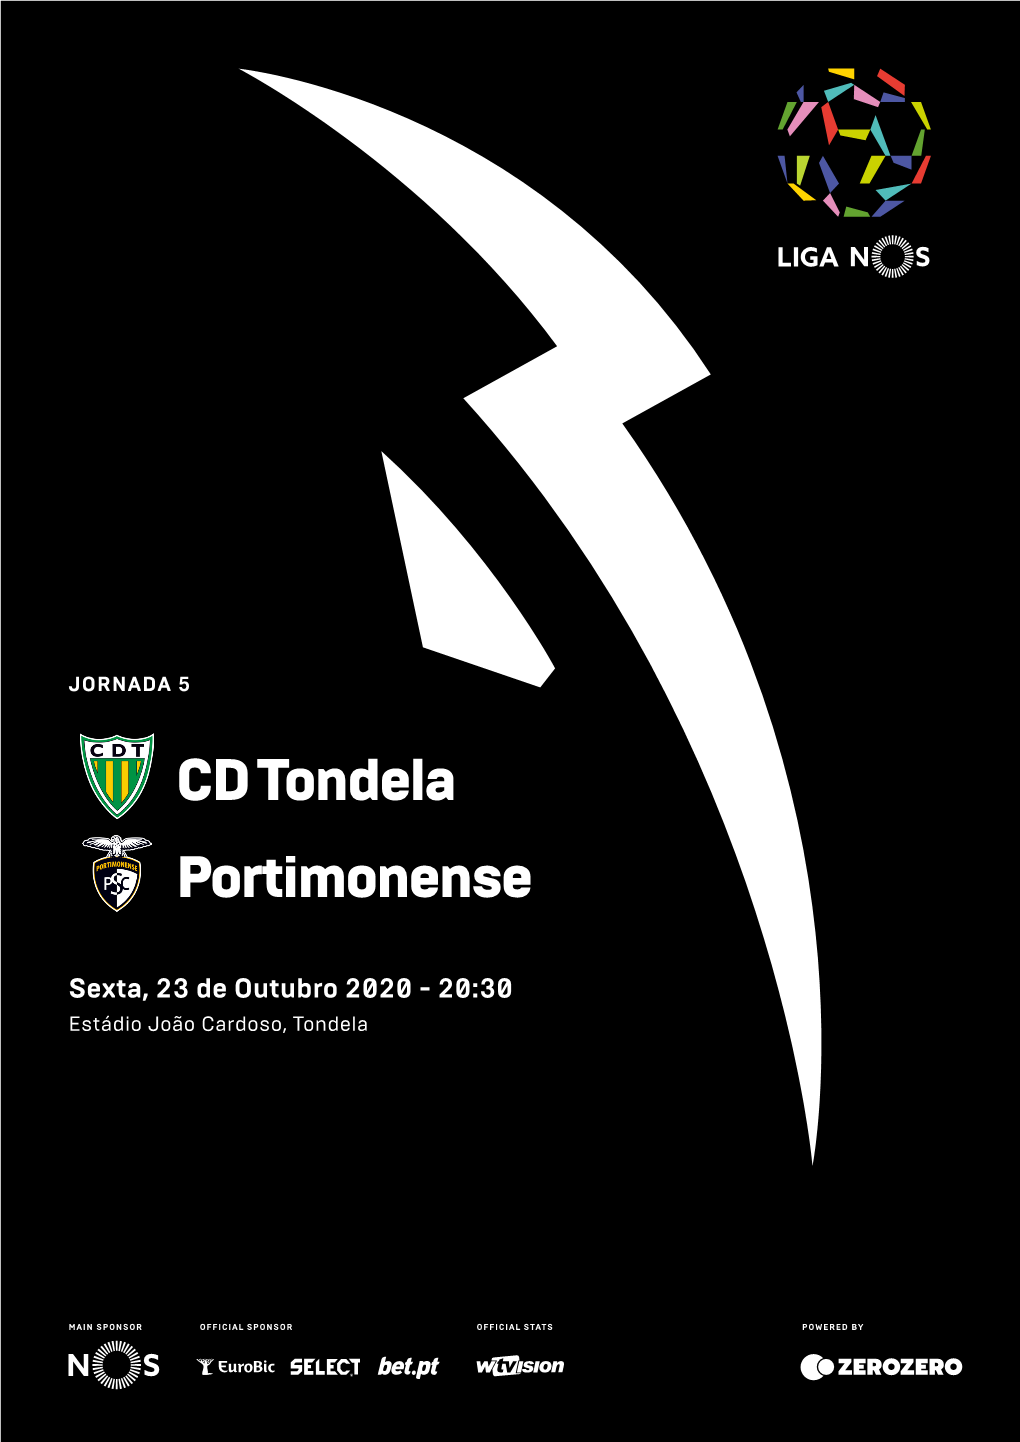 CD Tondela Portimonense